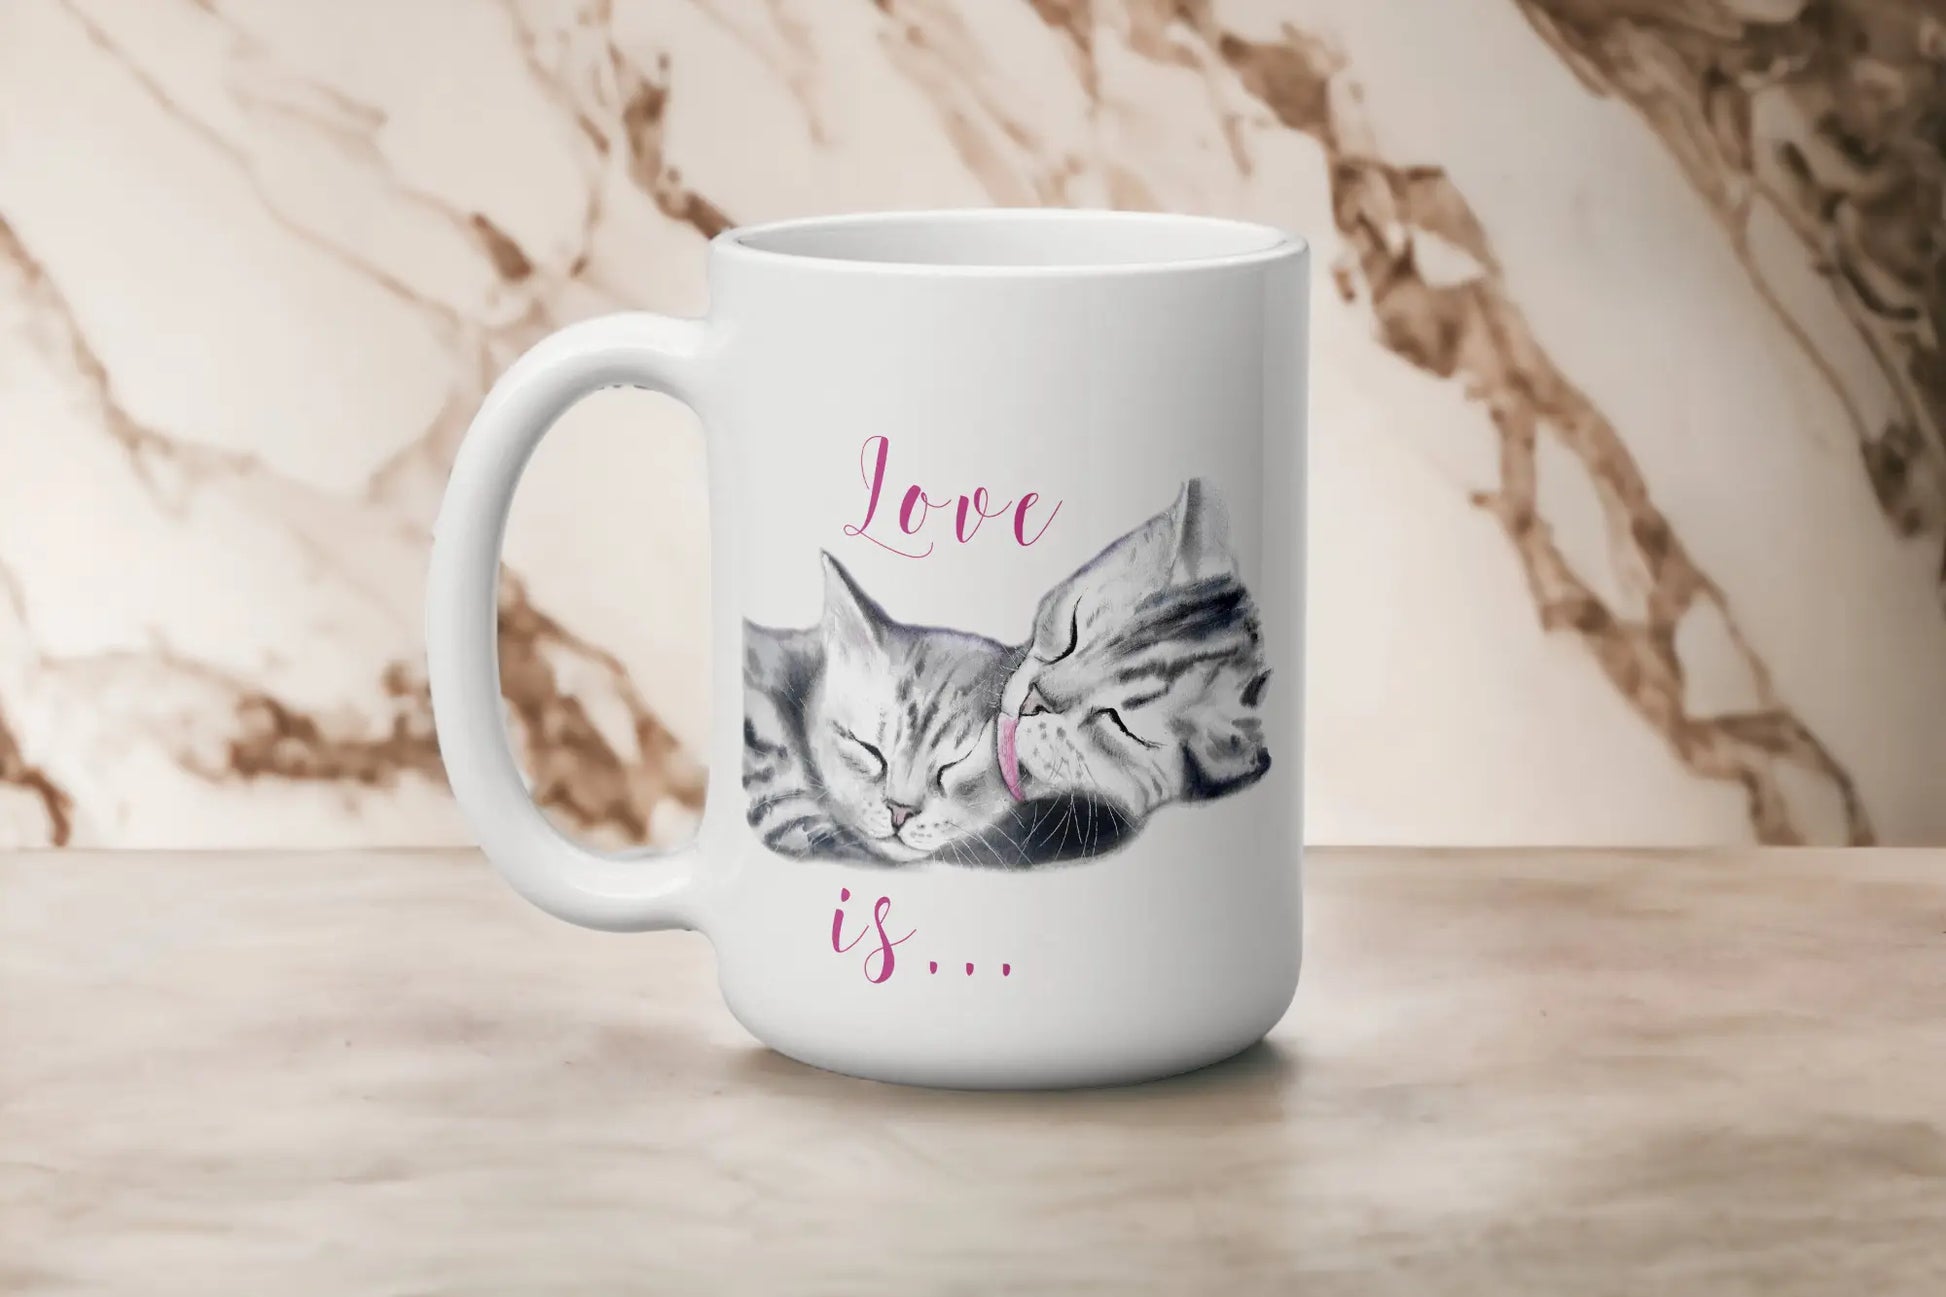  Love is ... Cats Coffee Mug by Free Spirit Accessories sold by Free Spirit Accessories